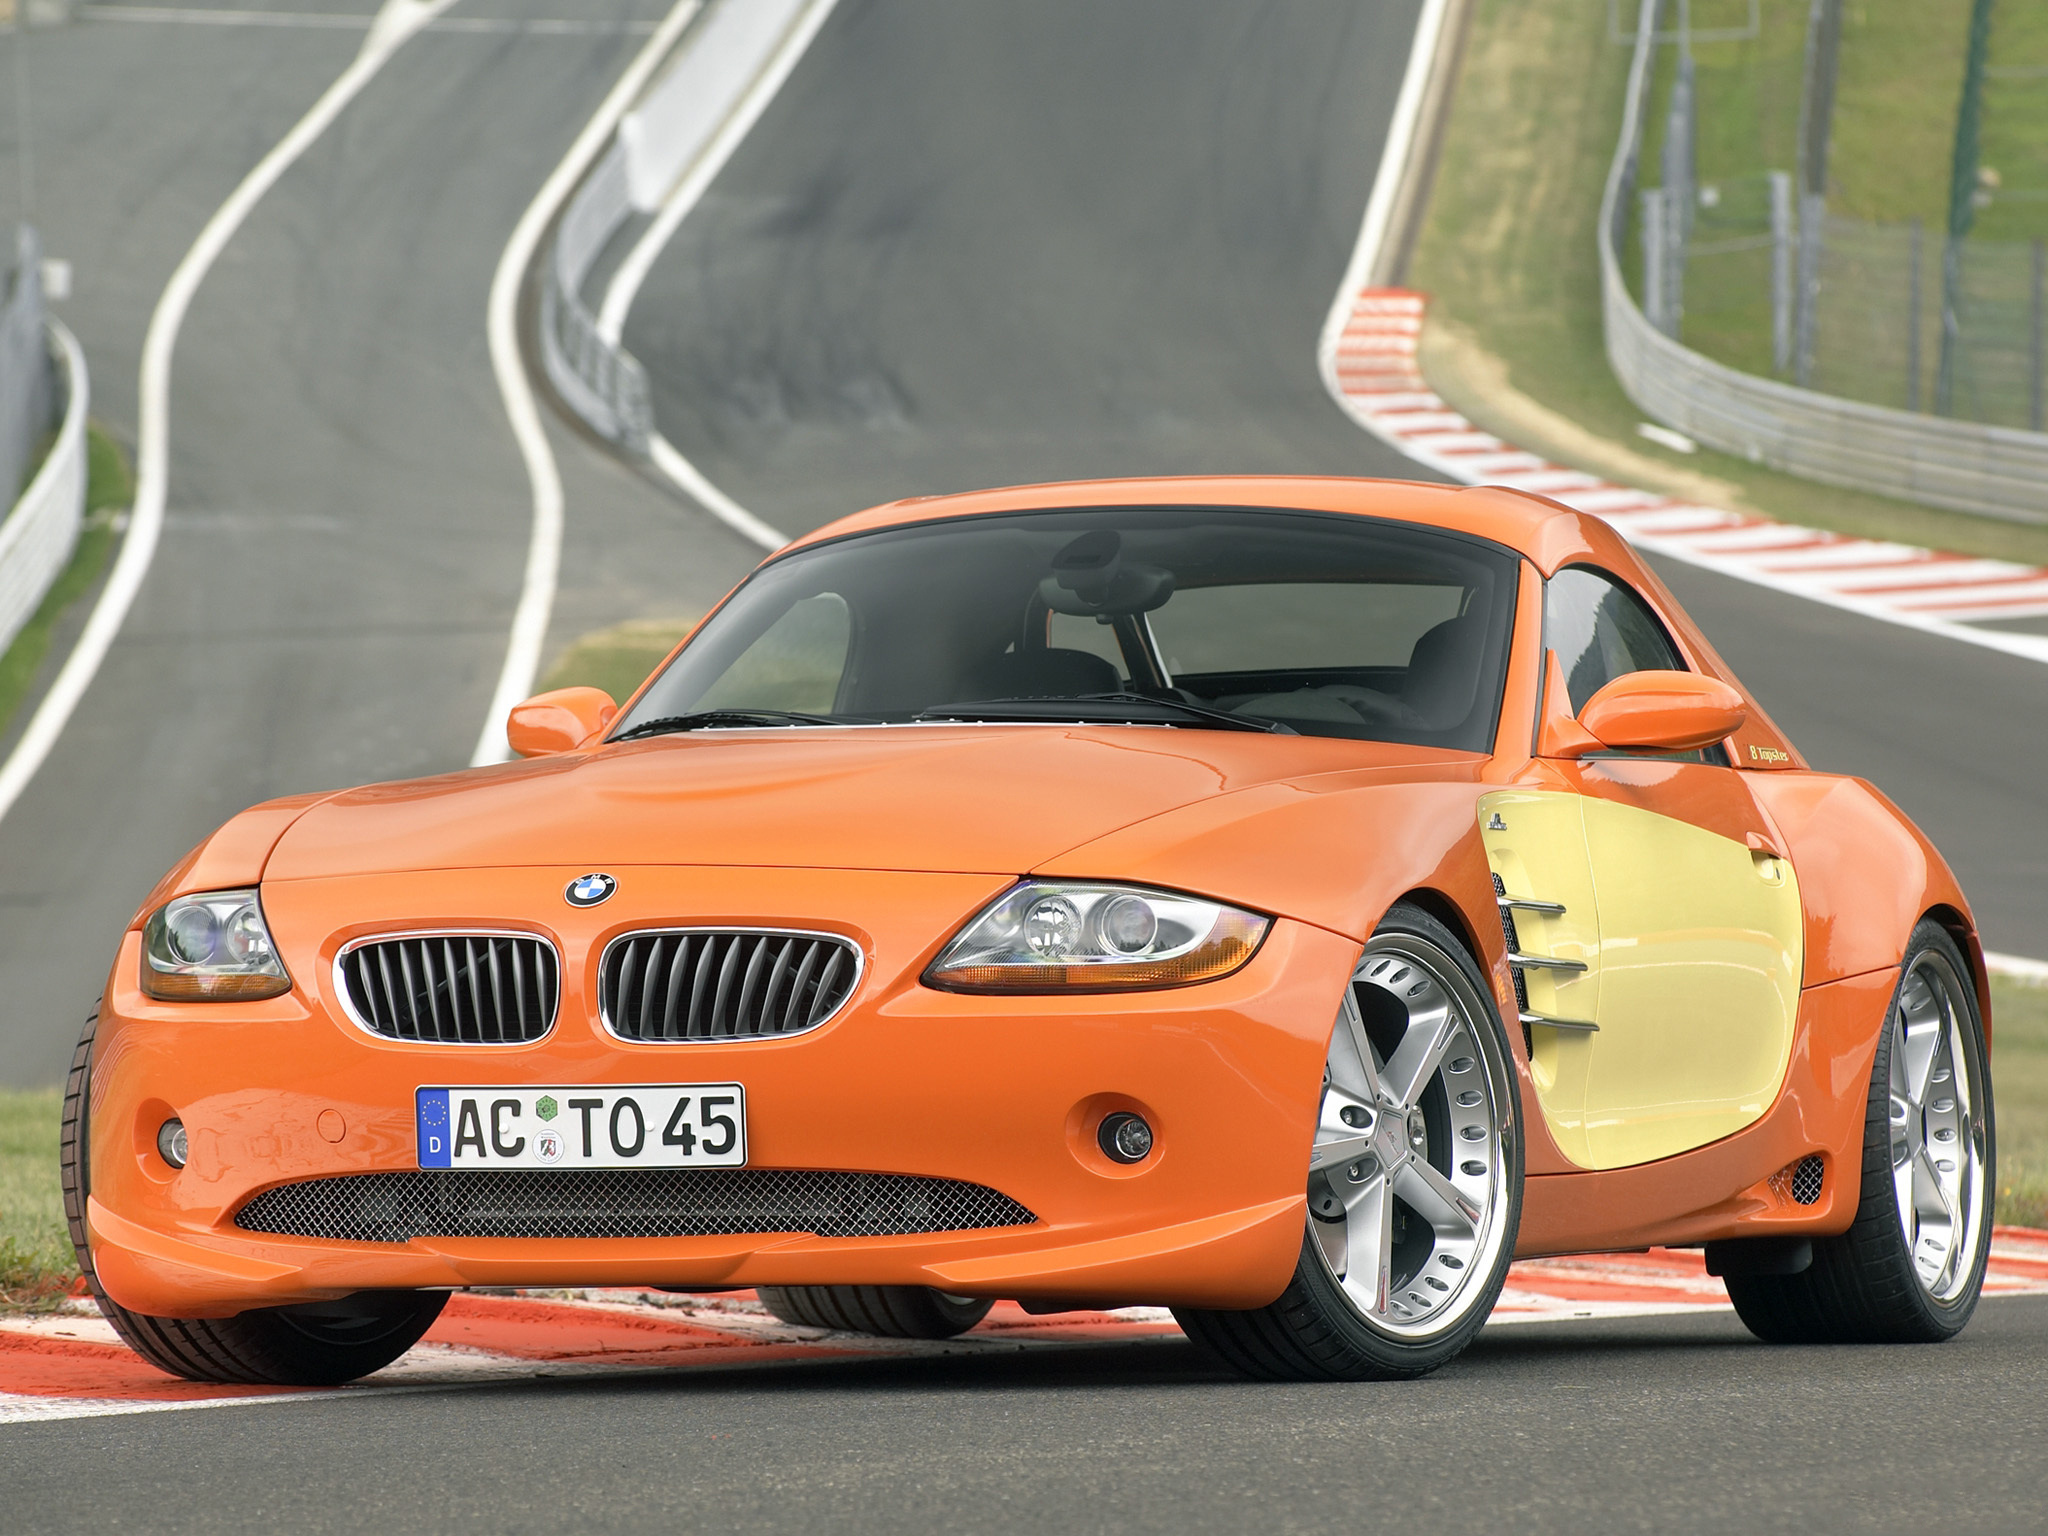 Любые виды машин. BMW z4 оранжевая. BMW z4 2003. Шницер БМВ. BMW z3 оранжевый.